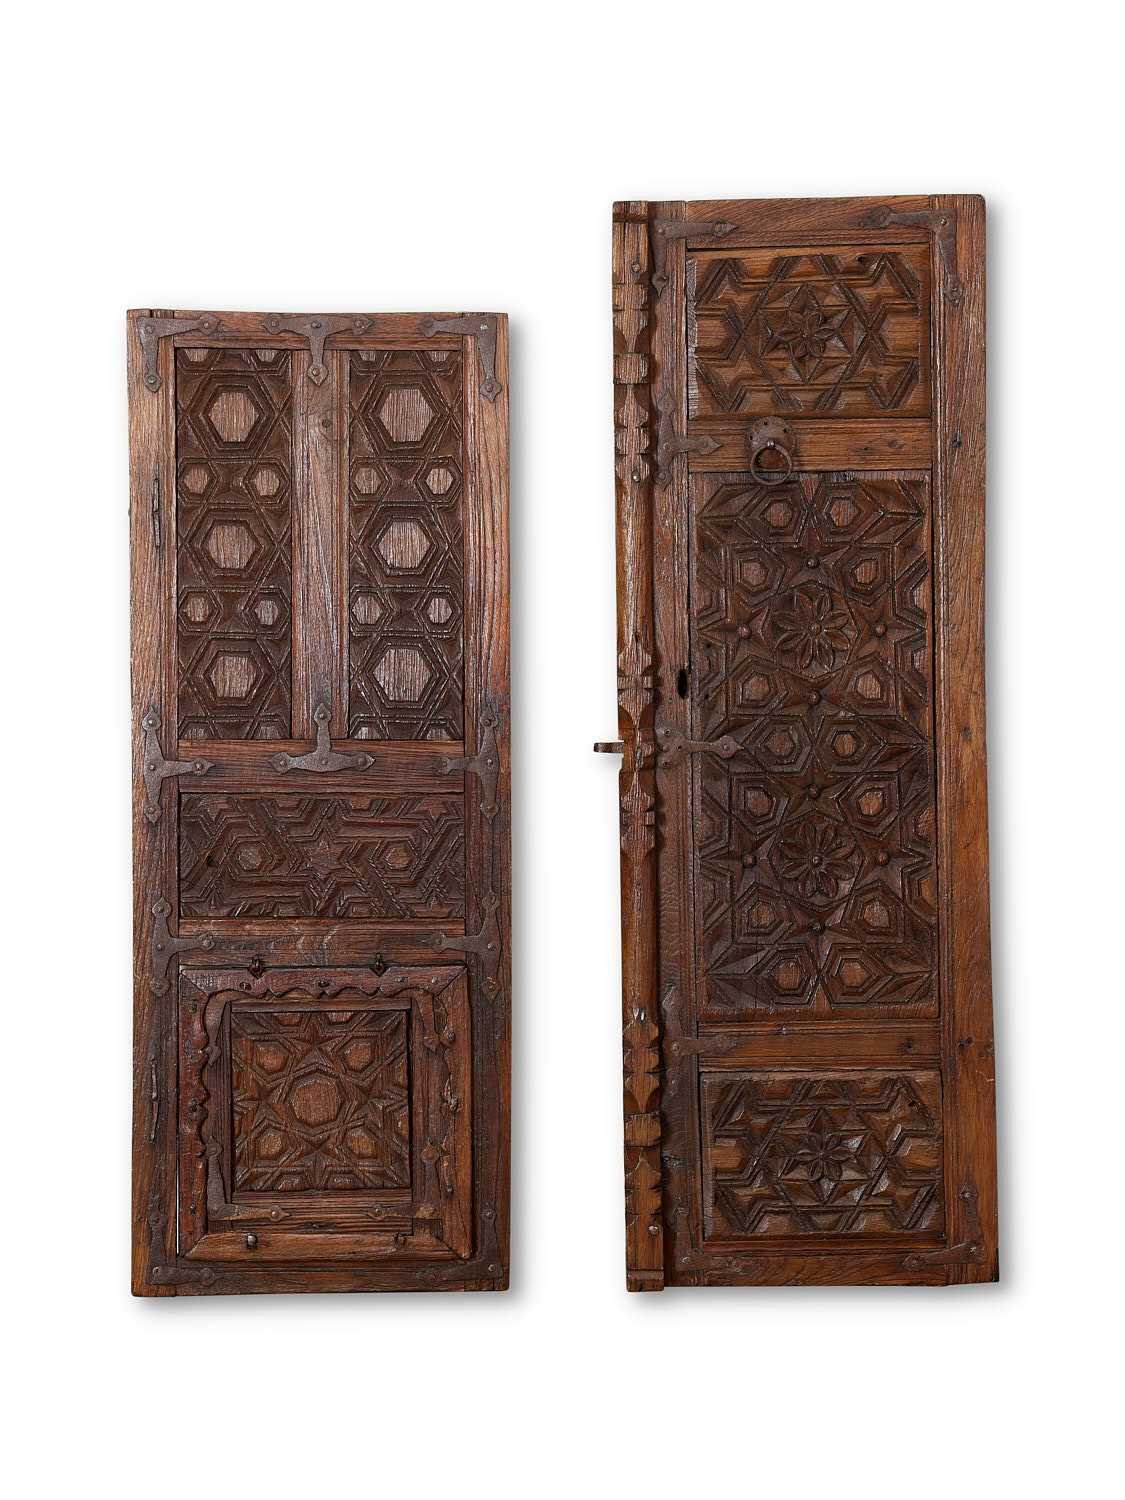 TWO 15TH CENTURY MAMLUK CARVED WOOD DOORS, EGYPT